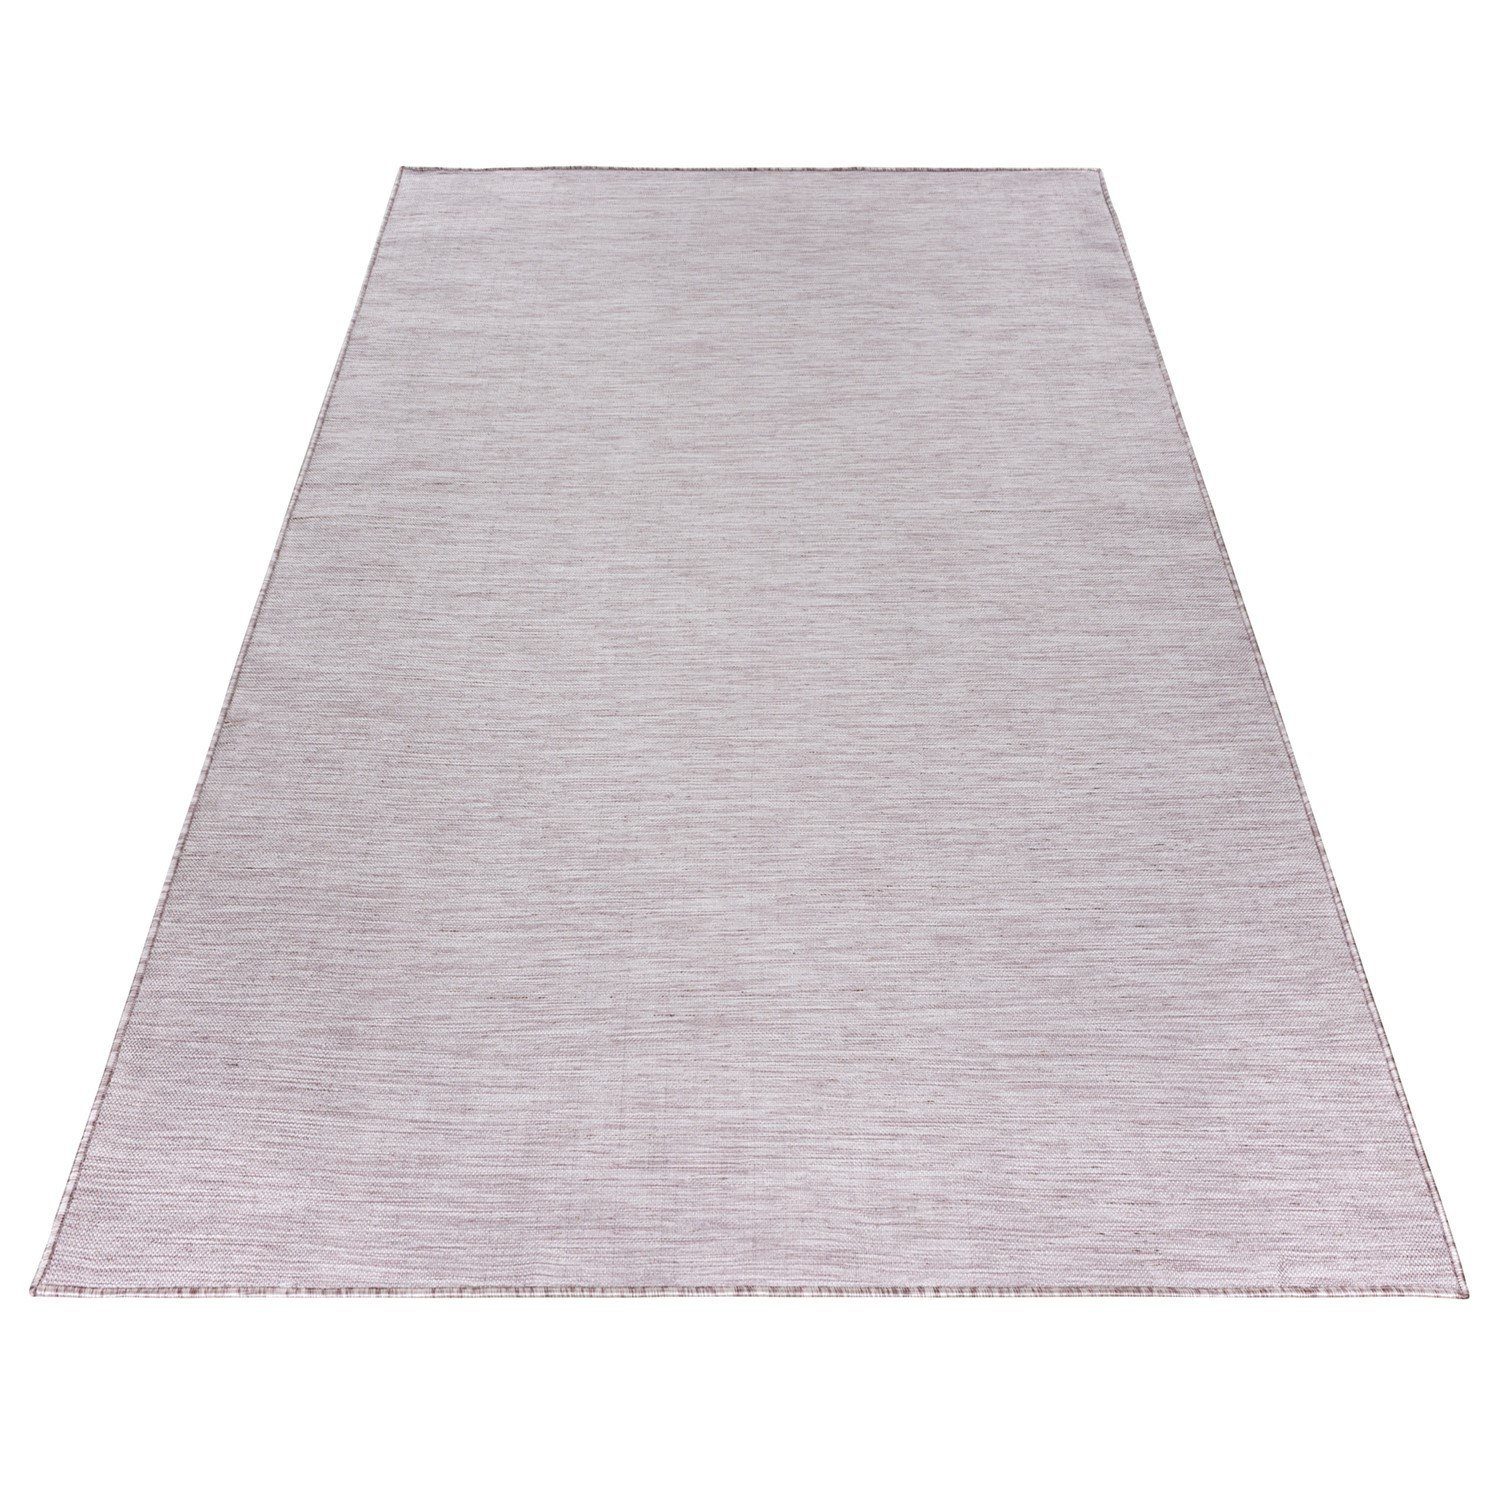 Miovani Indoor Outdoorteppich Sisal-Look Gartenteppich Pink Outdoorteppich, Teppich